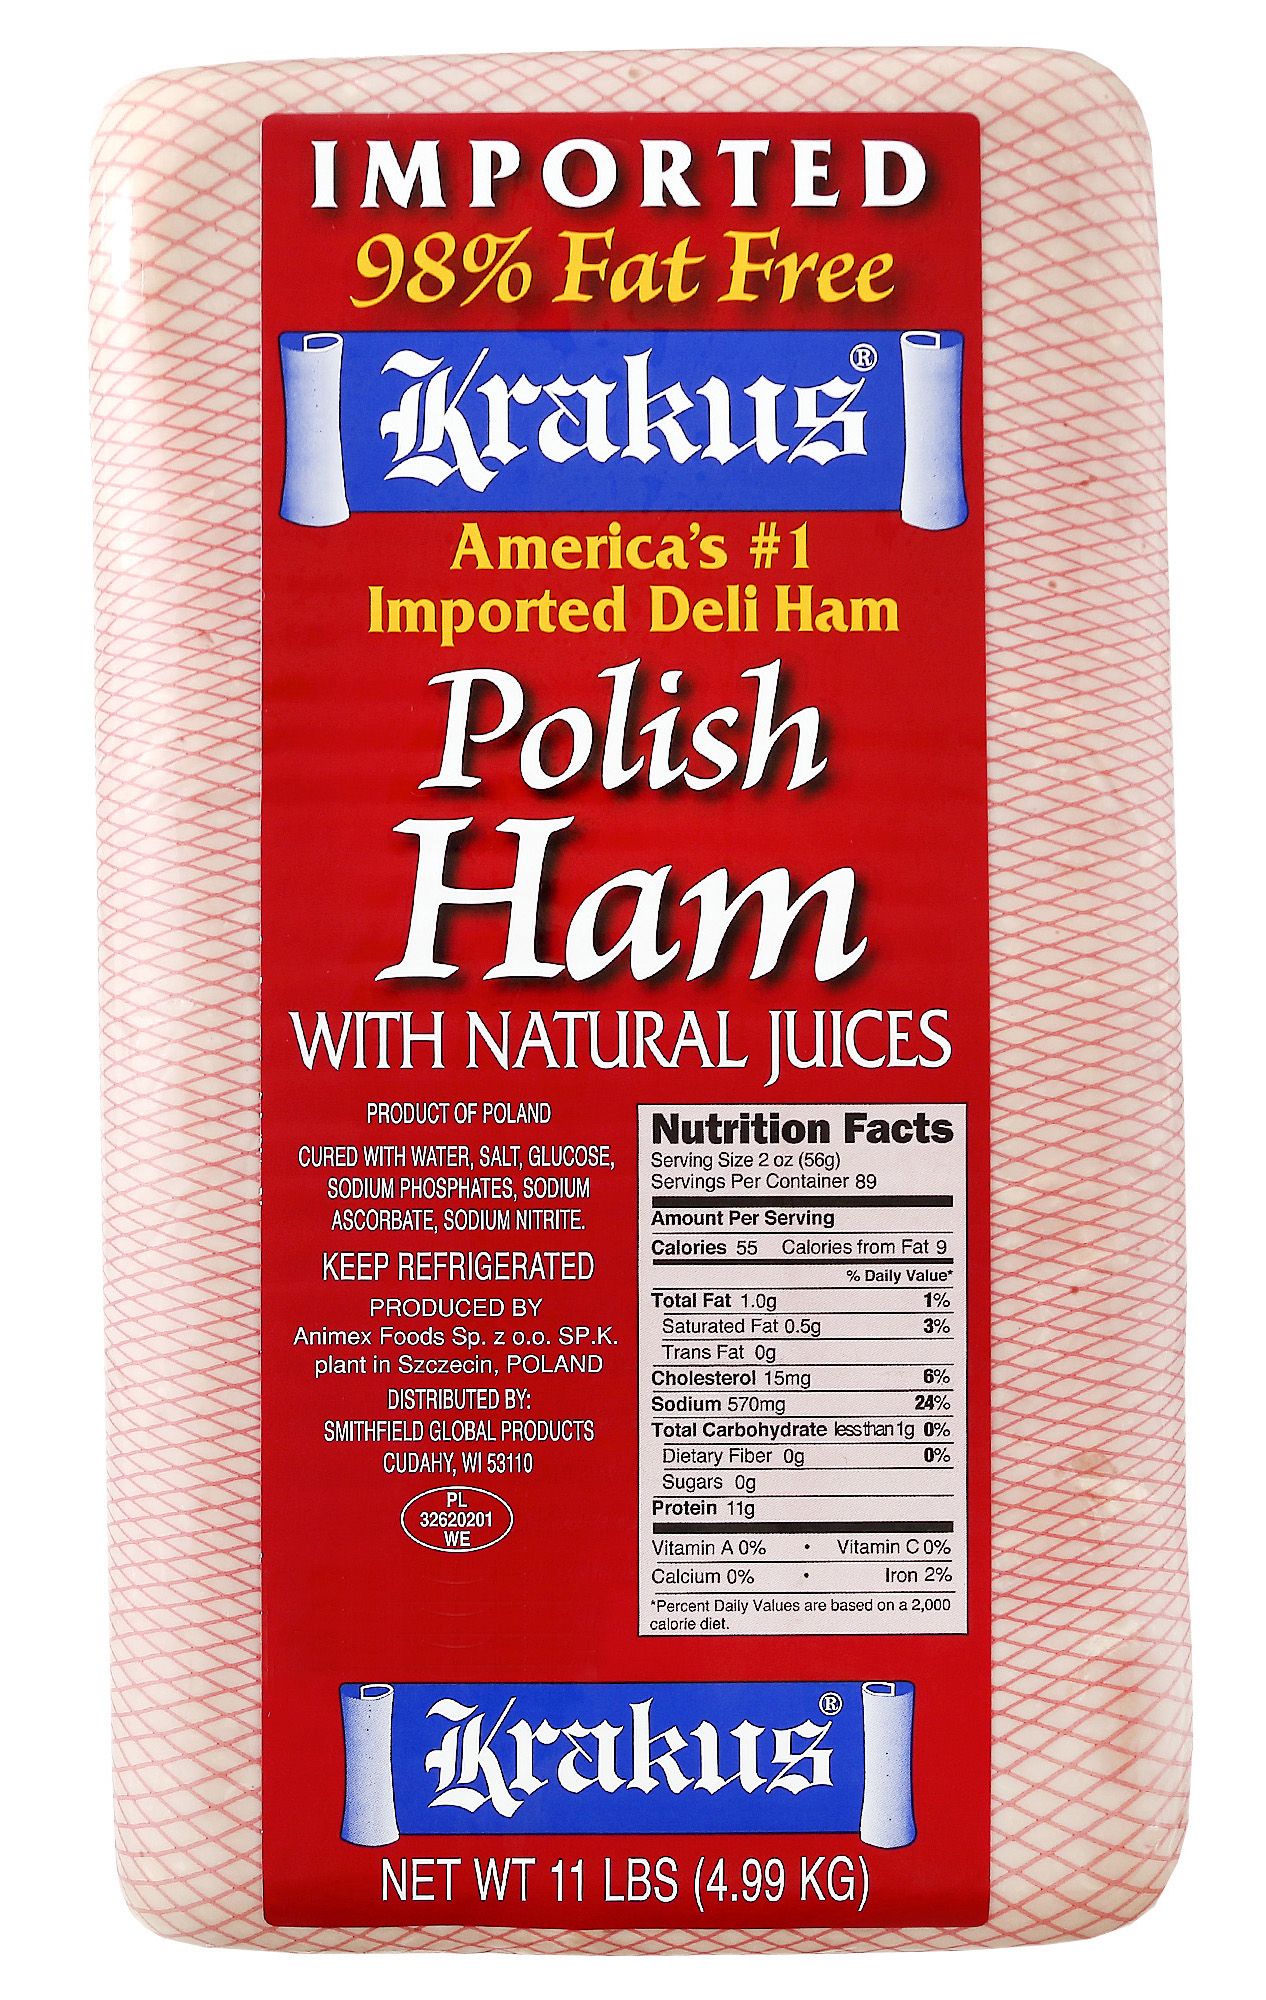 Krakus Imported Polish Ham, 0.75-1.5 lb Standard Cut, PS